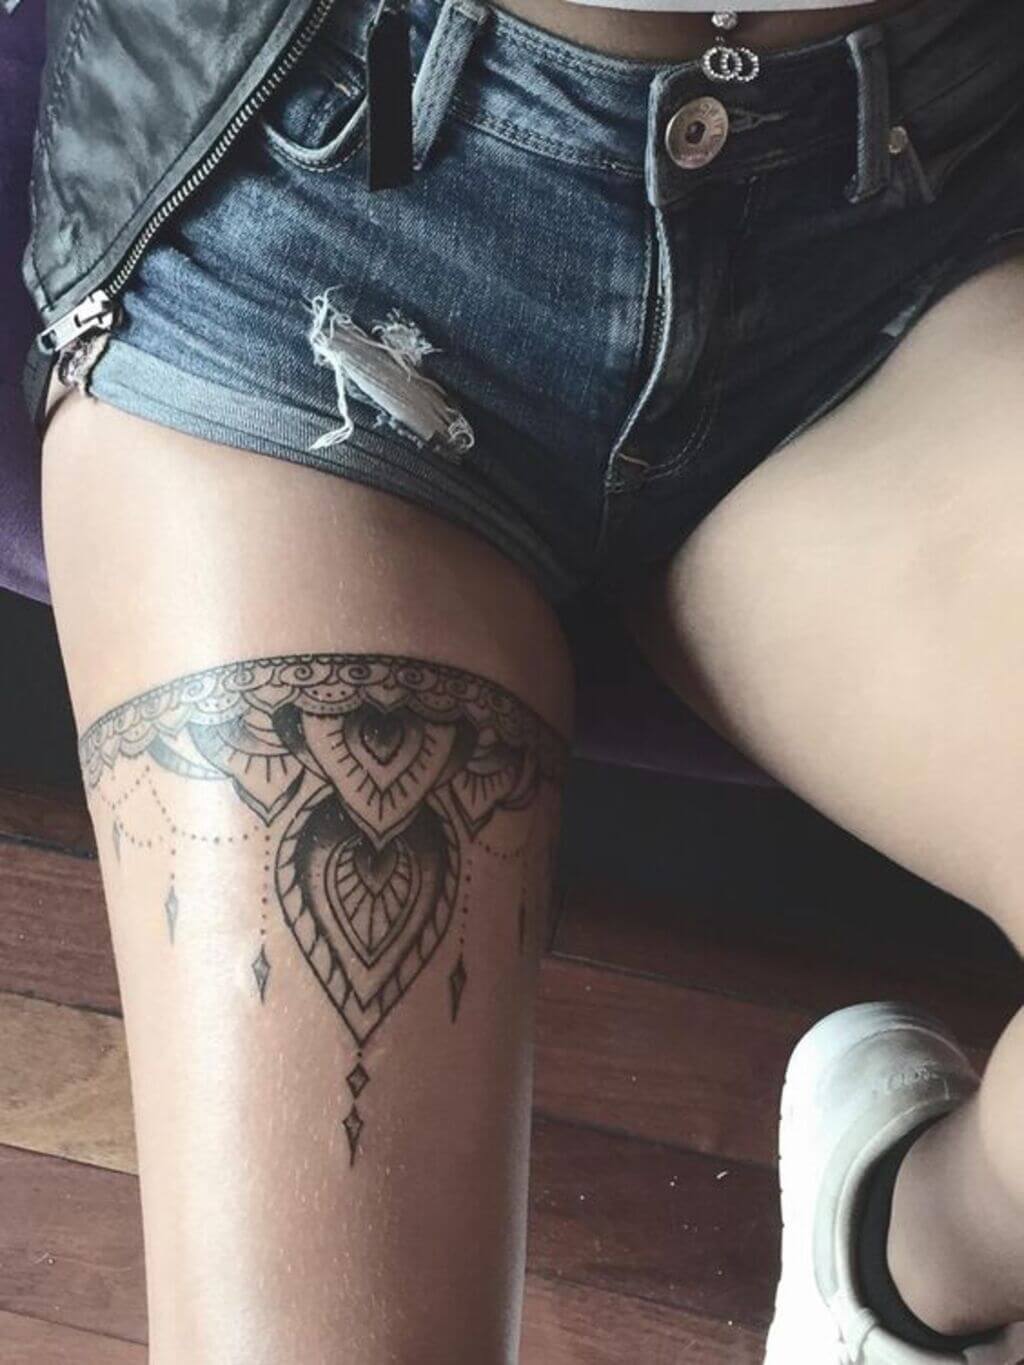 thigh tattoos for women